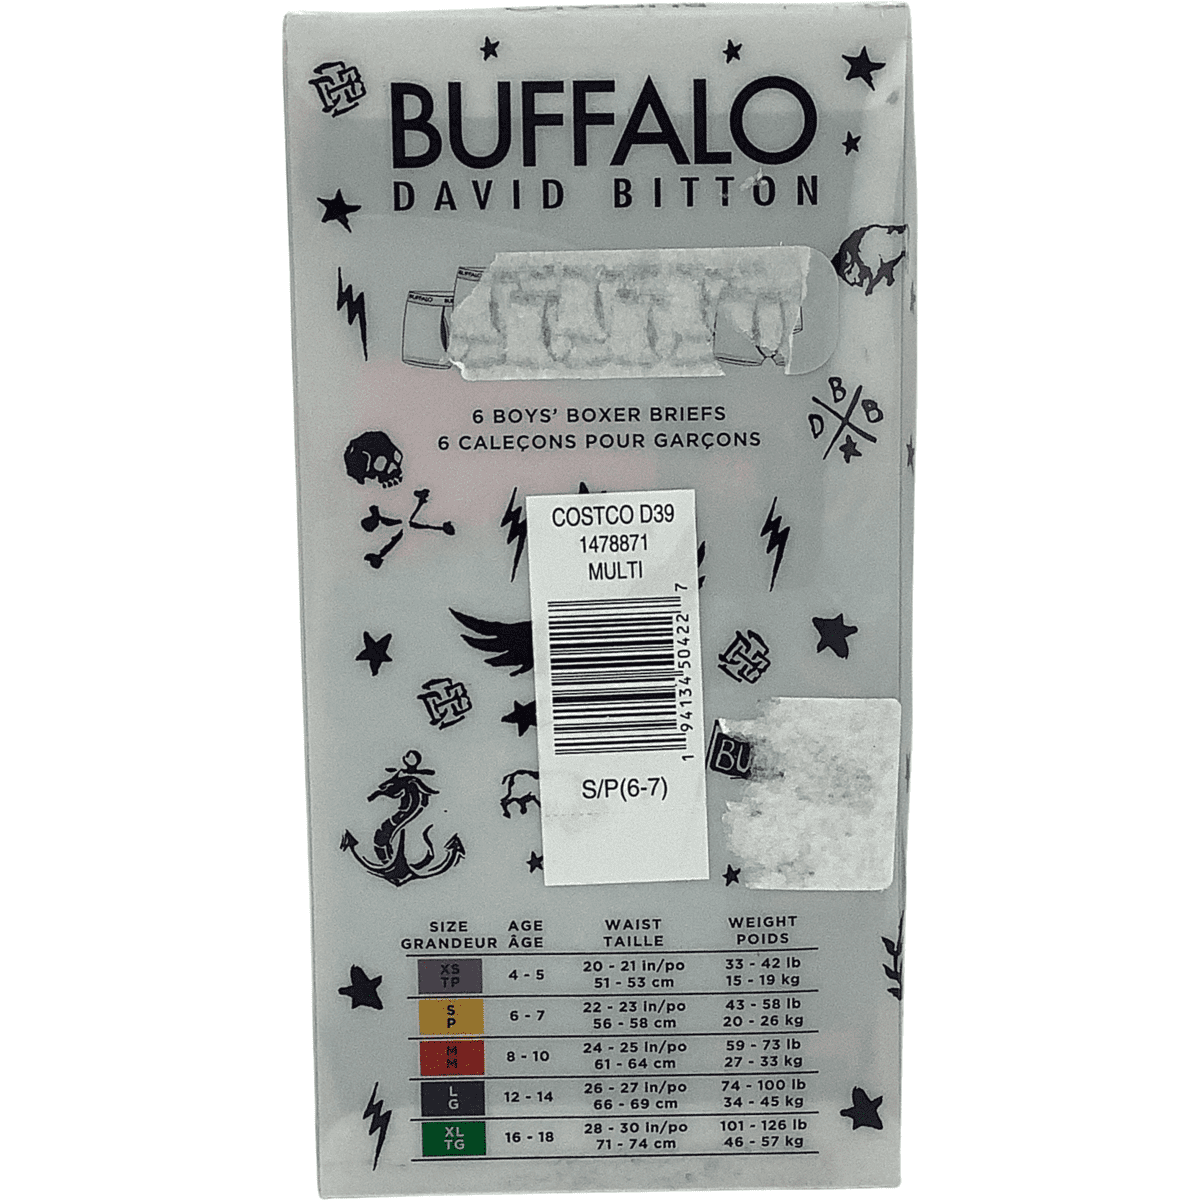 Buffalo David Bitton Boy's Boxer Briefs in red and Grey_02